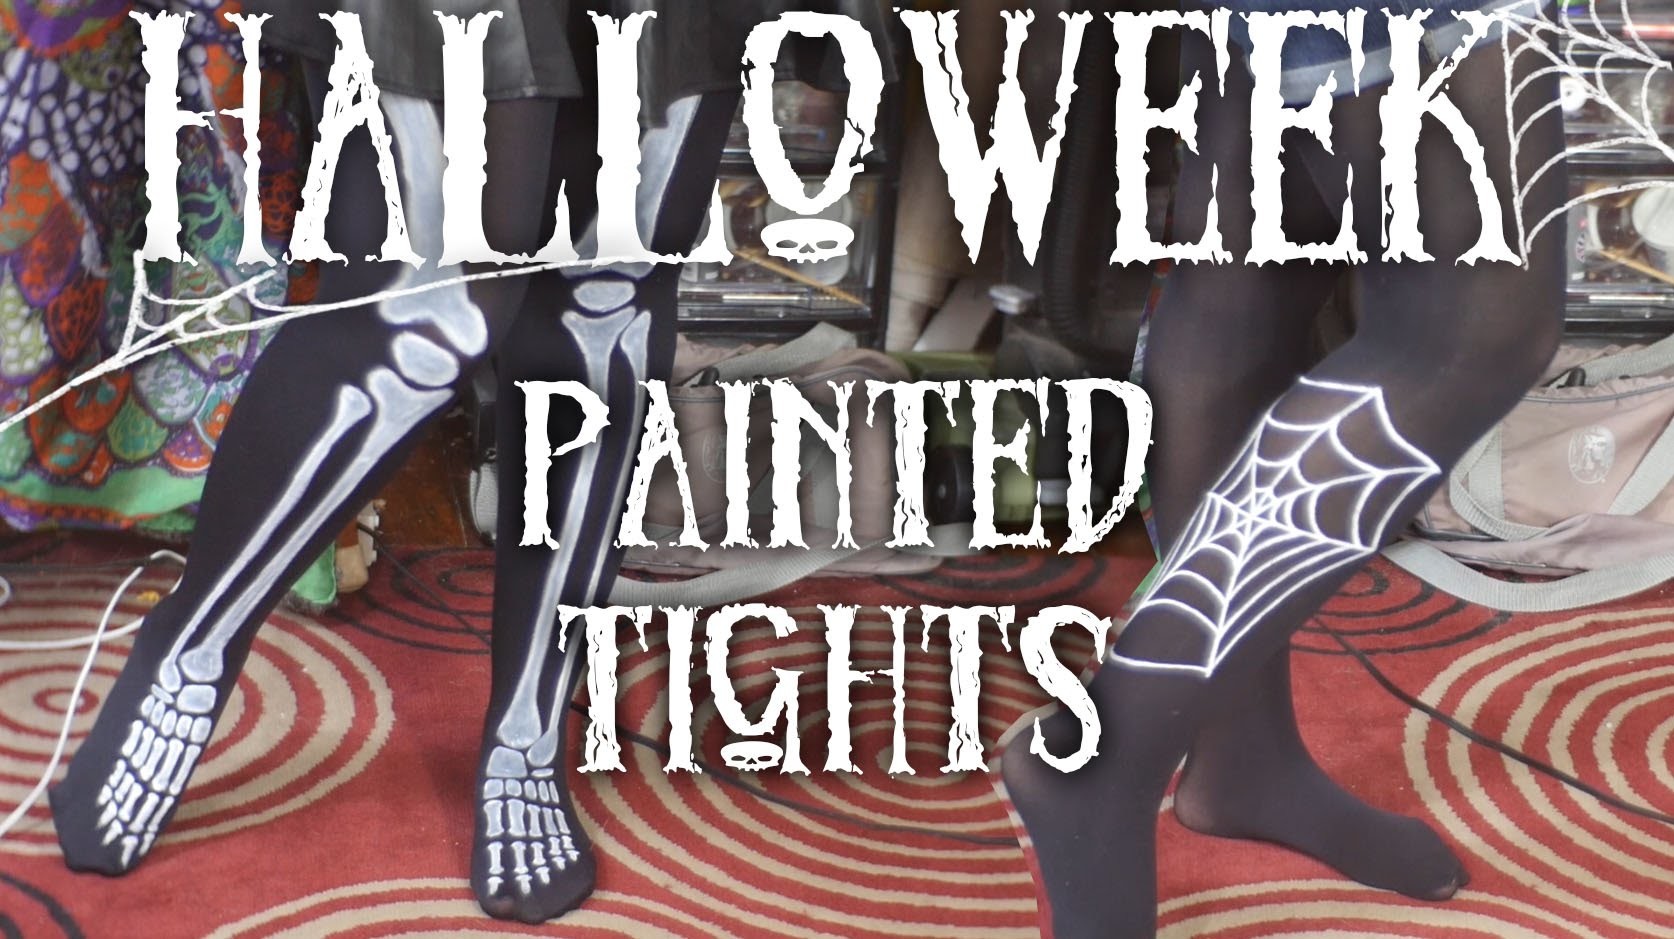 How to Make Halloween Themed Painted Tights : DIY ~HALLOWEEK~